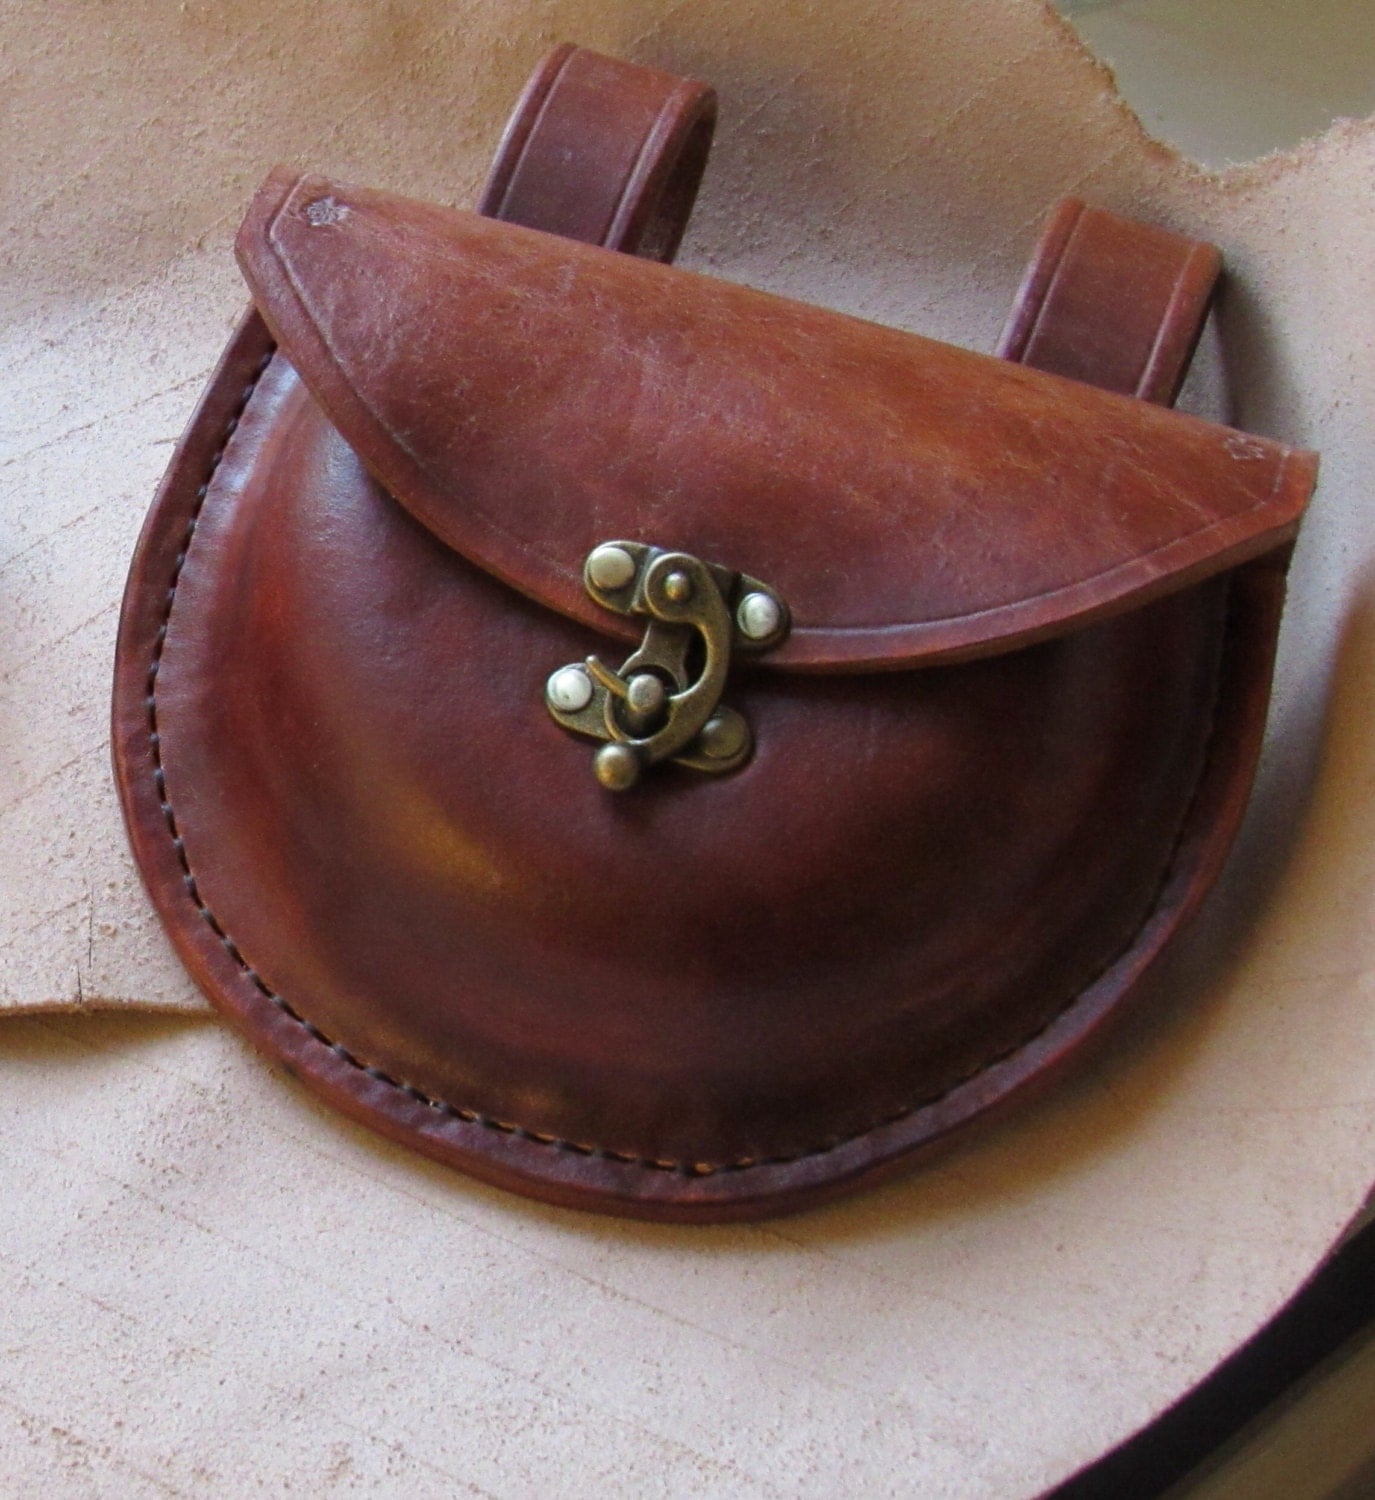 Multi-purpose leather bushcraft belt pouch